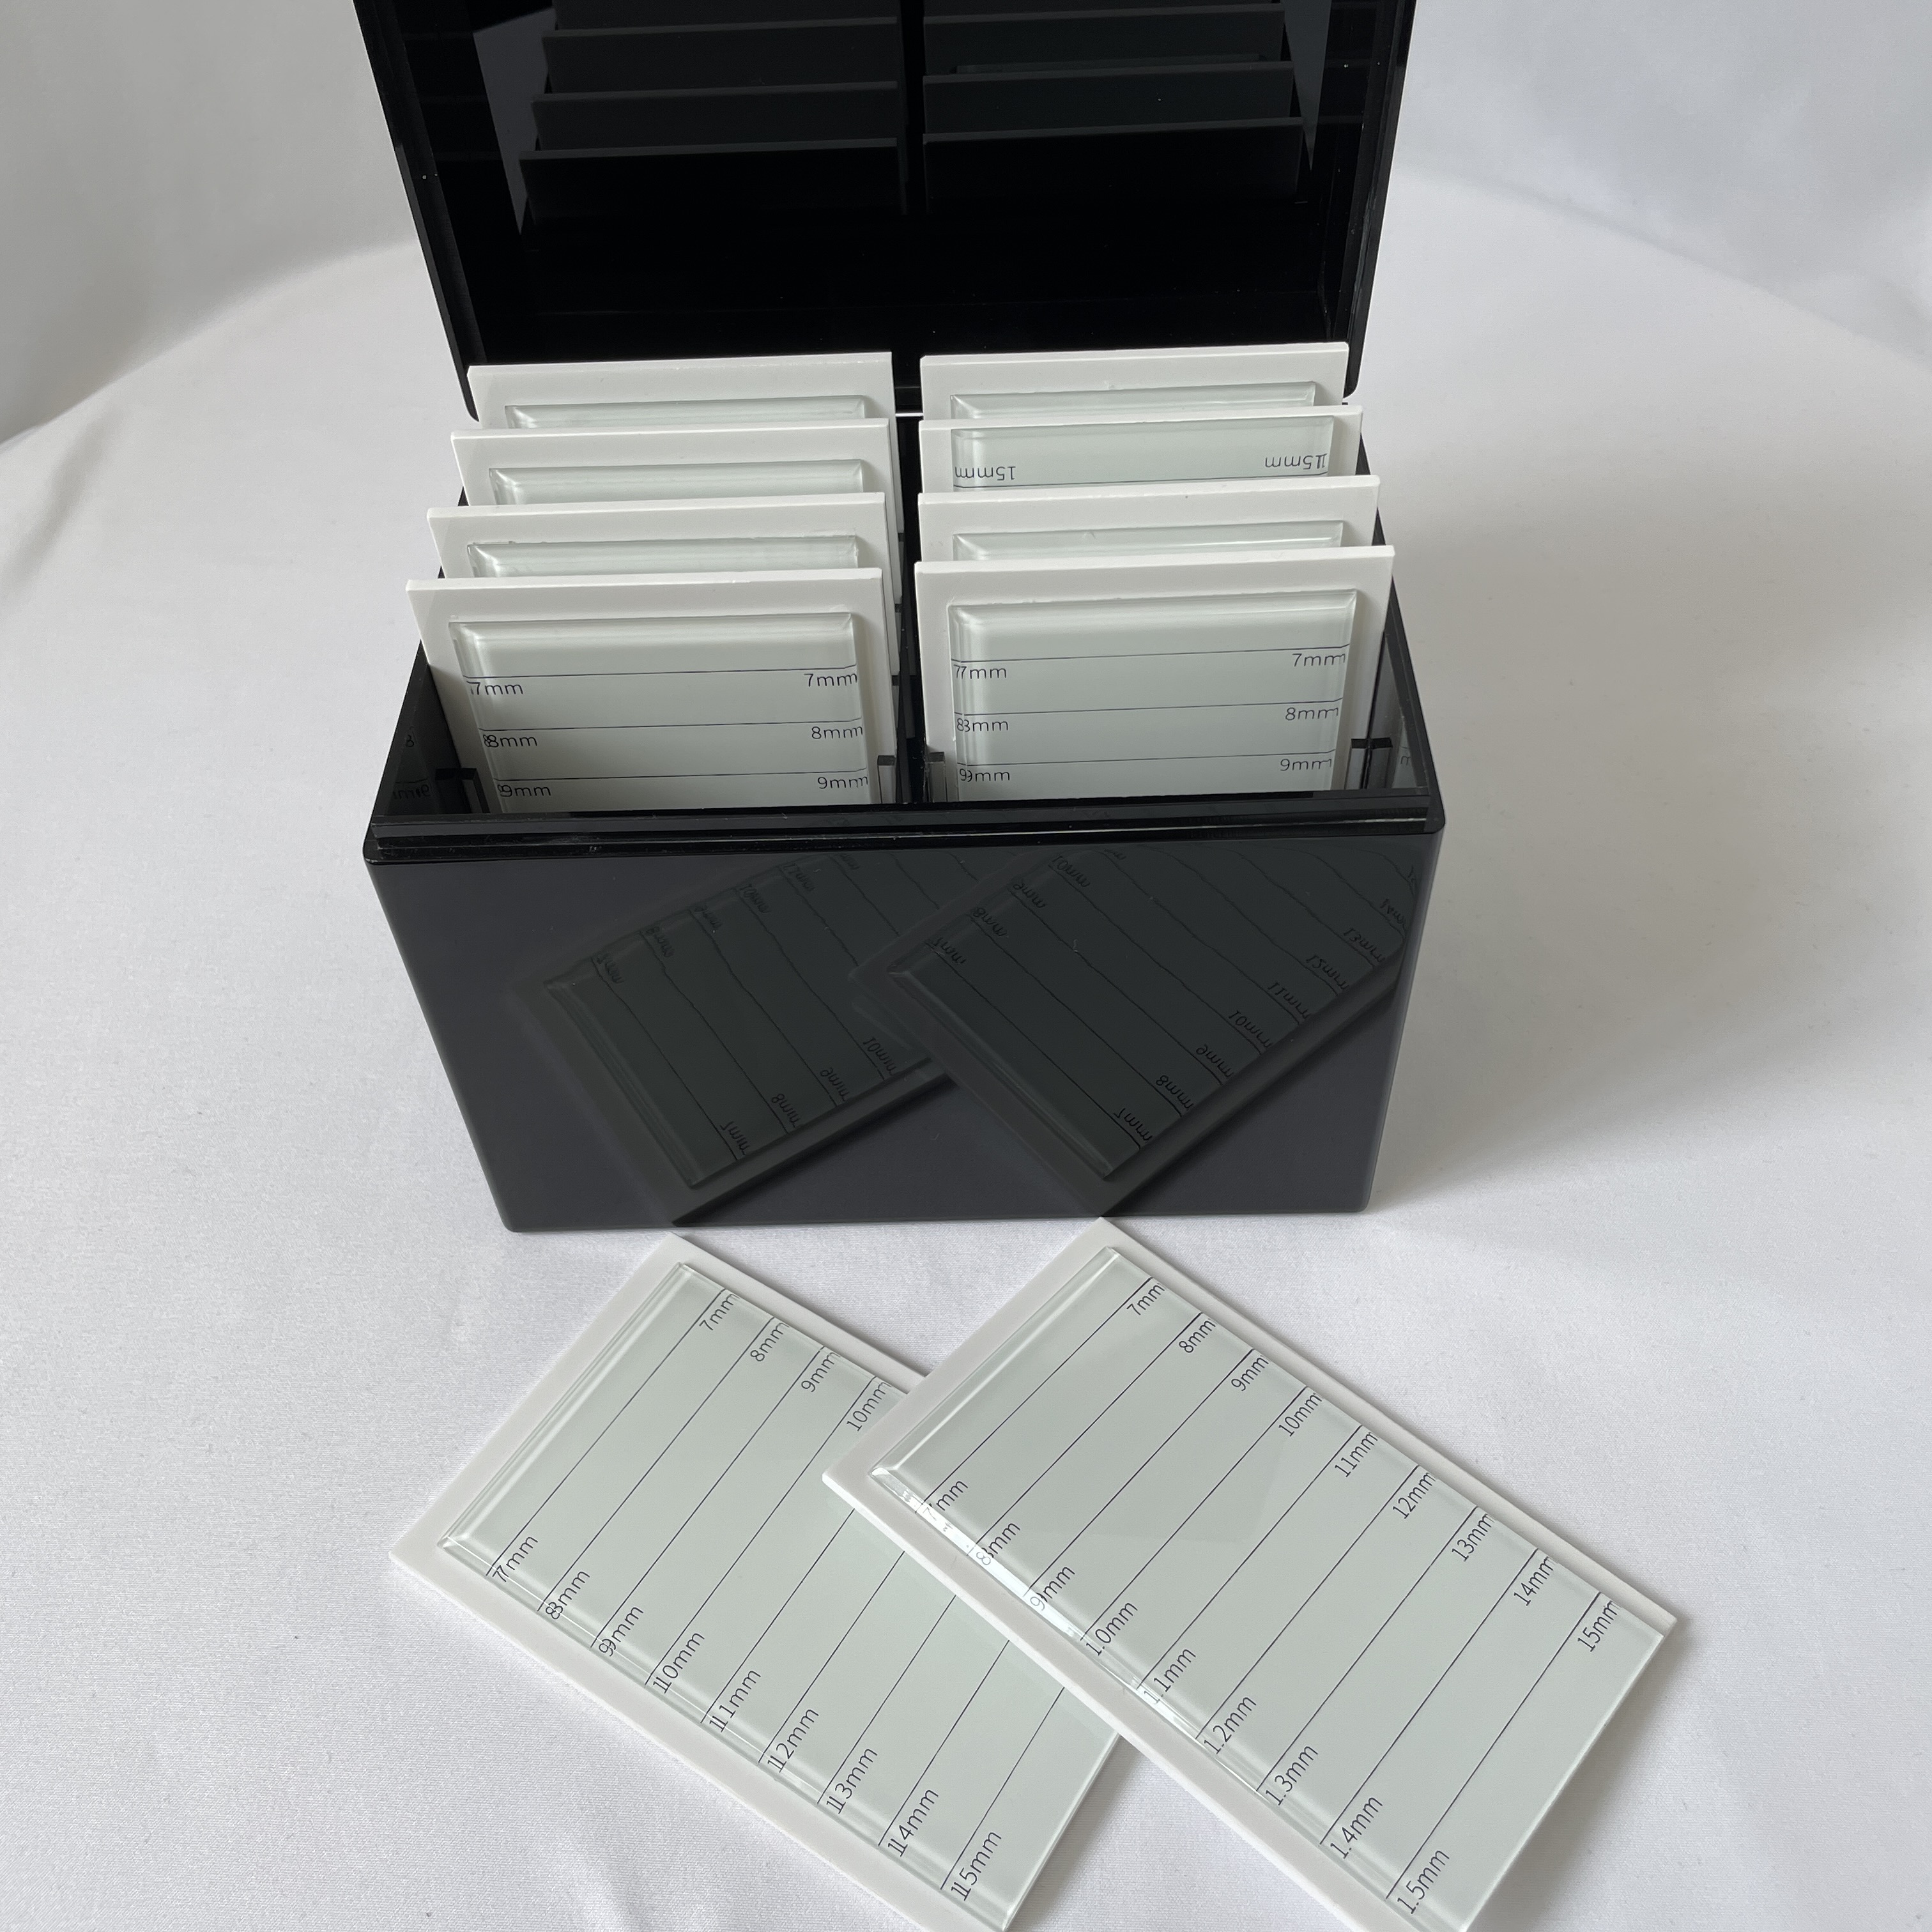 plastic extension box tweezer eyelashes strips tray storage case display stand rack clear acrylic eyelash organizer holder